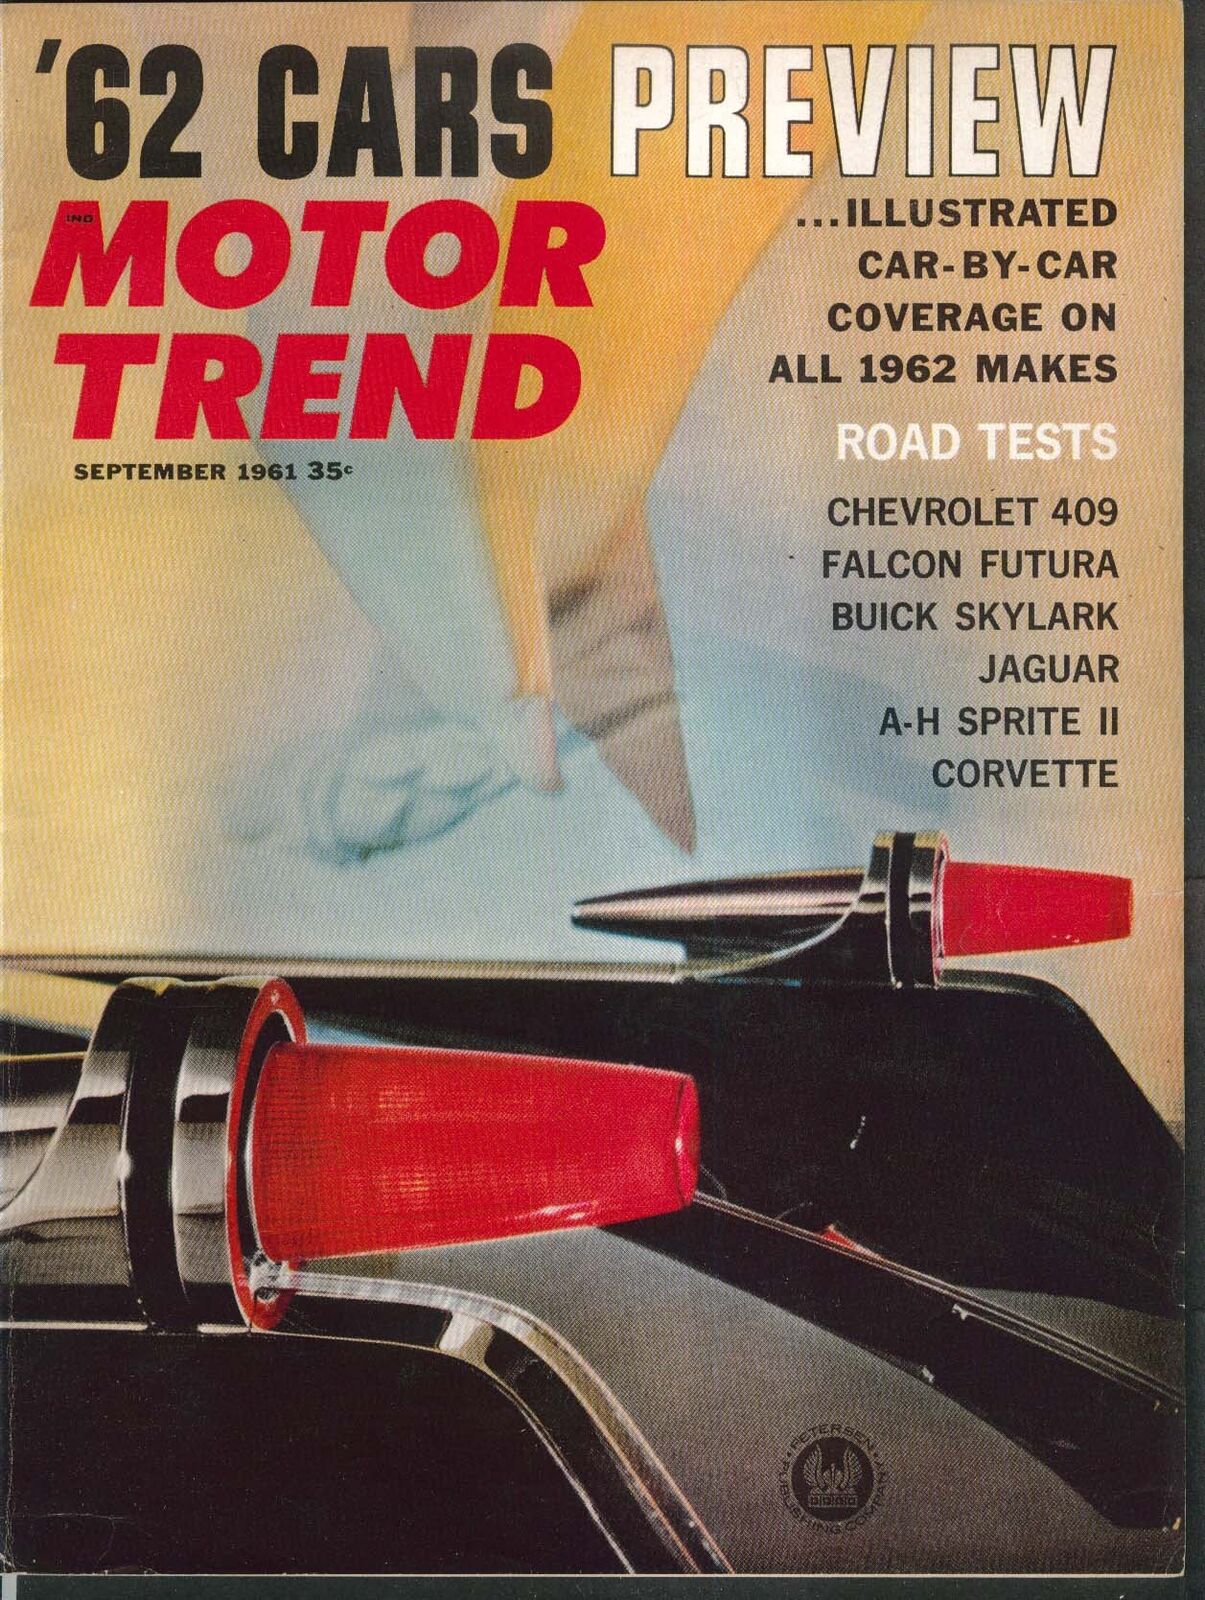 MOTOR TREND Corvette Volvo Jaguar 3.8 Falcon Futura Buick Skylark tests 9 1961